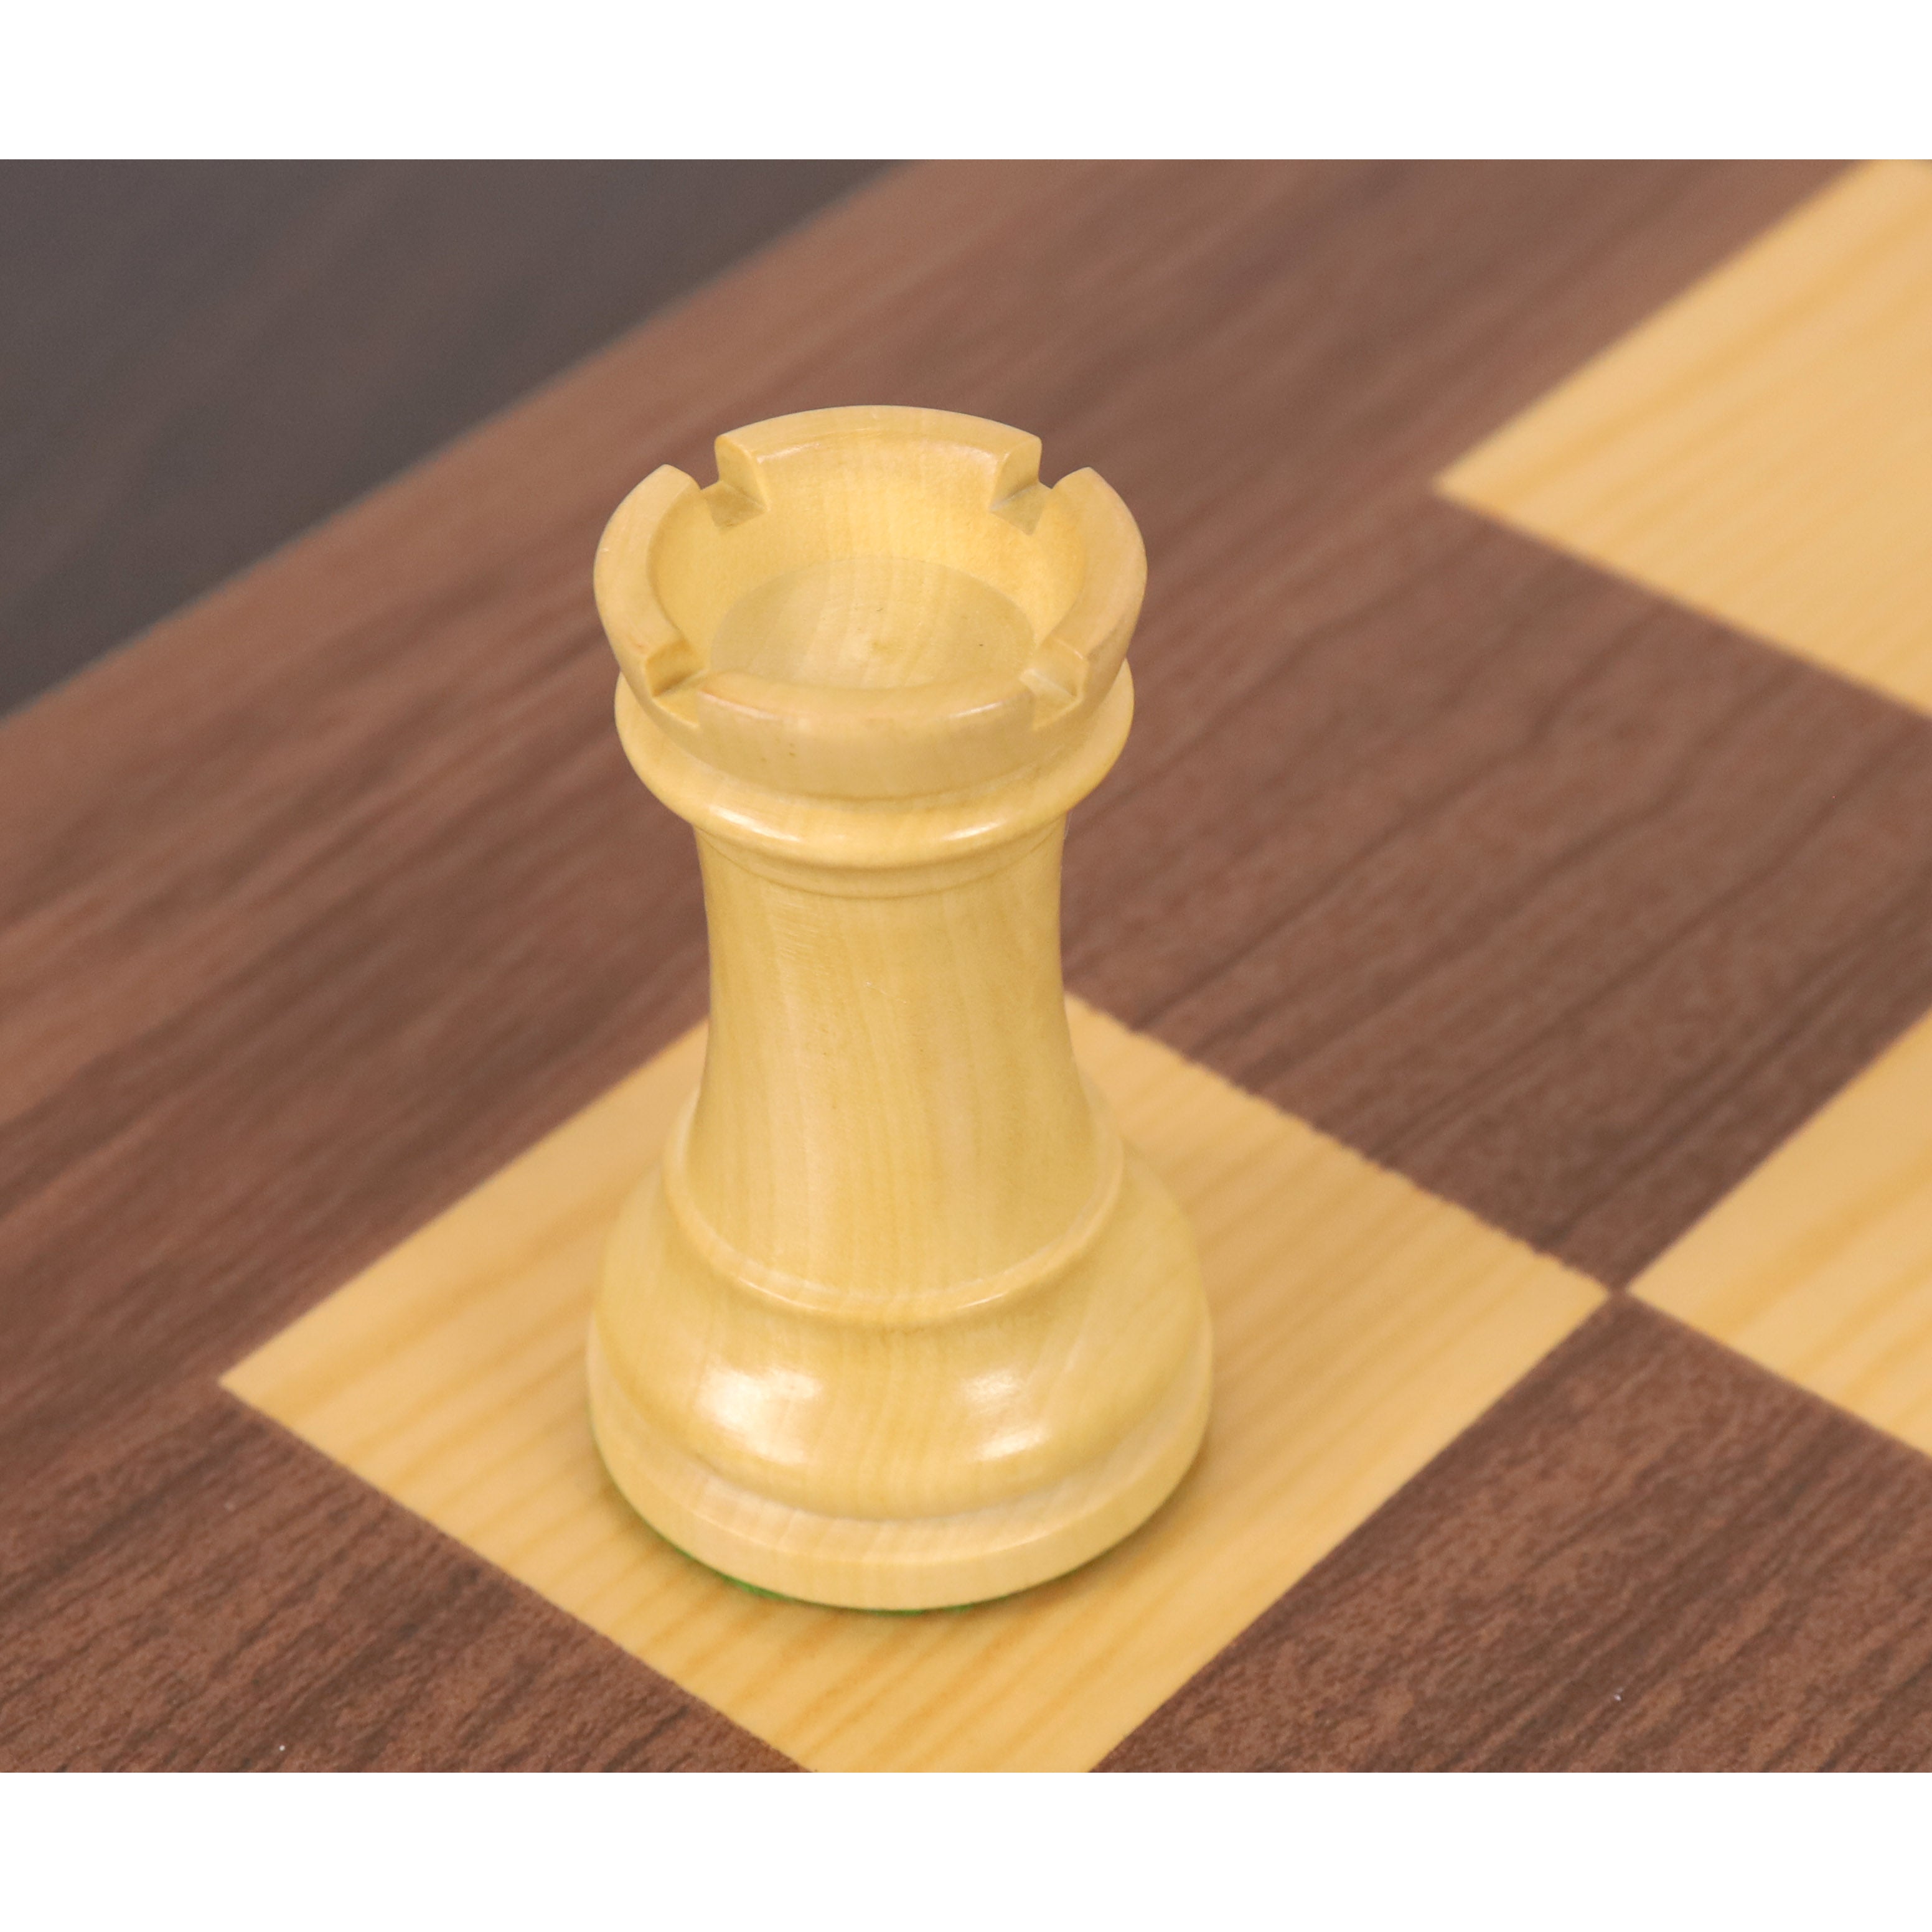 Wooden Chess Only 32 Standard Championship Staunton Wooden Chess